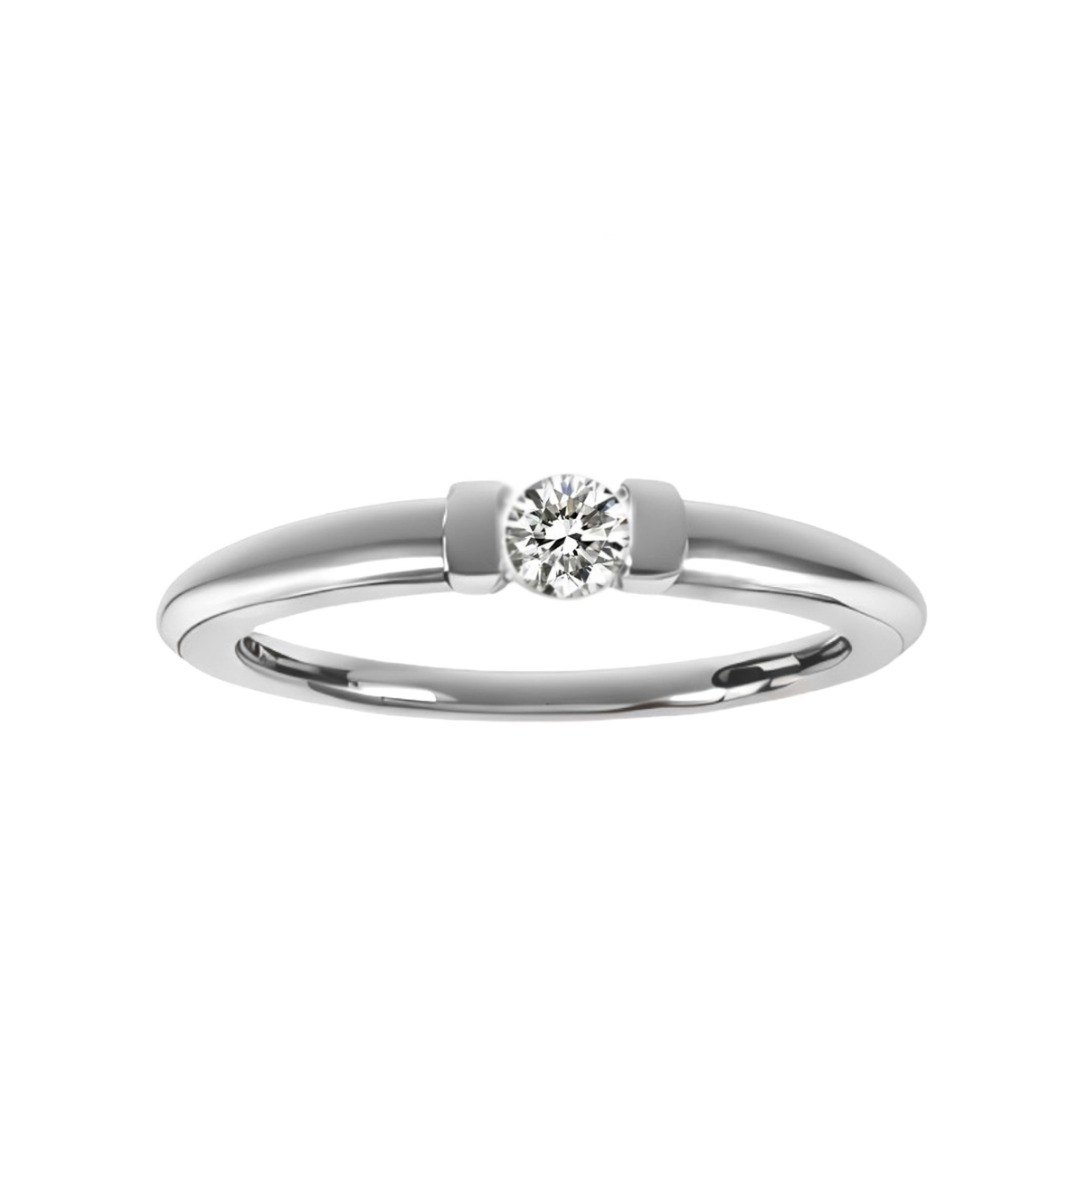 anillo de compromiso oro blanco 18 ktes con diamante talla brillante engastado a presión, fotografía frontal